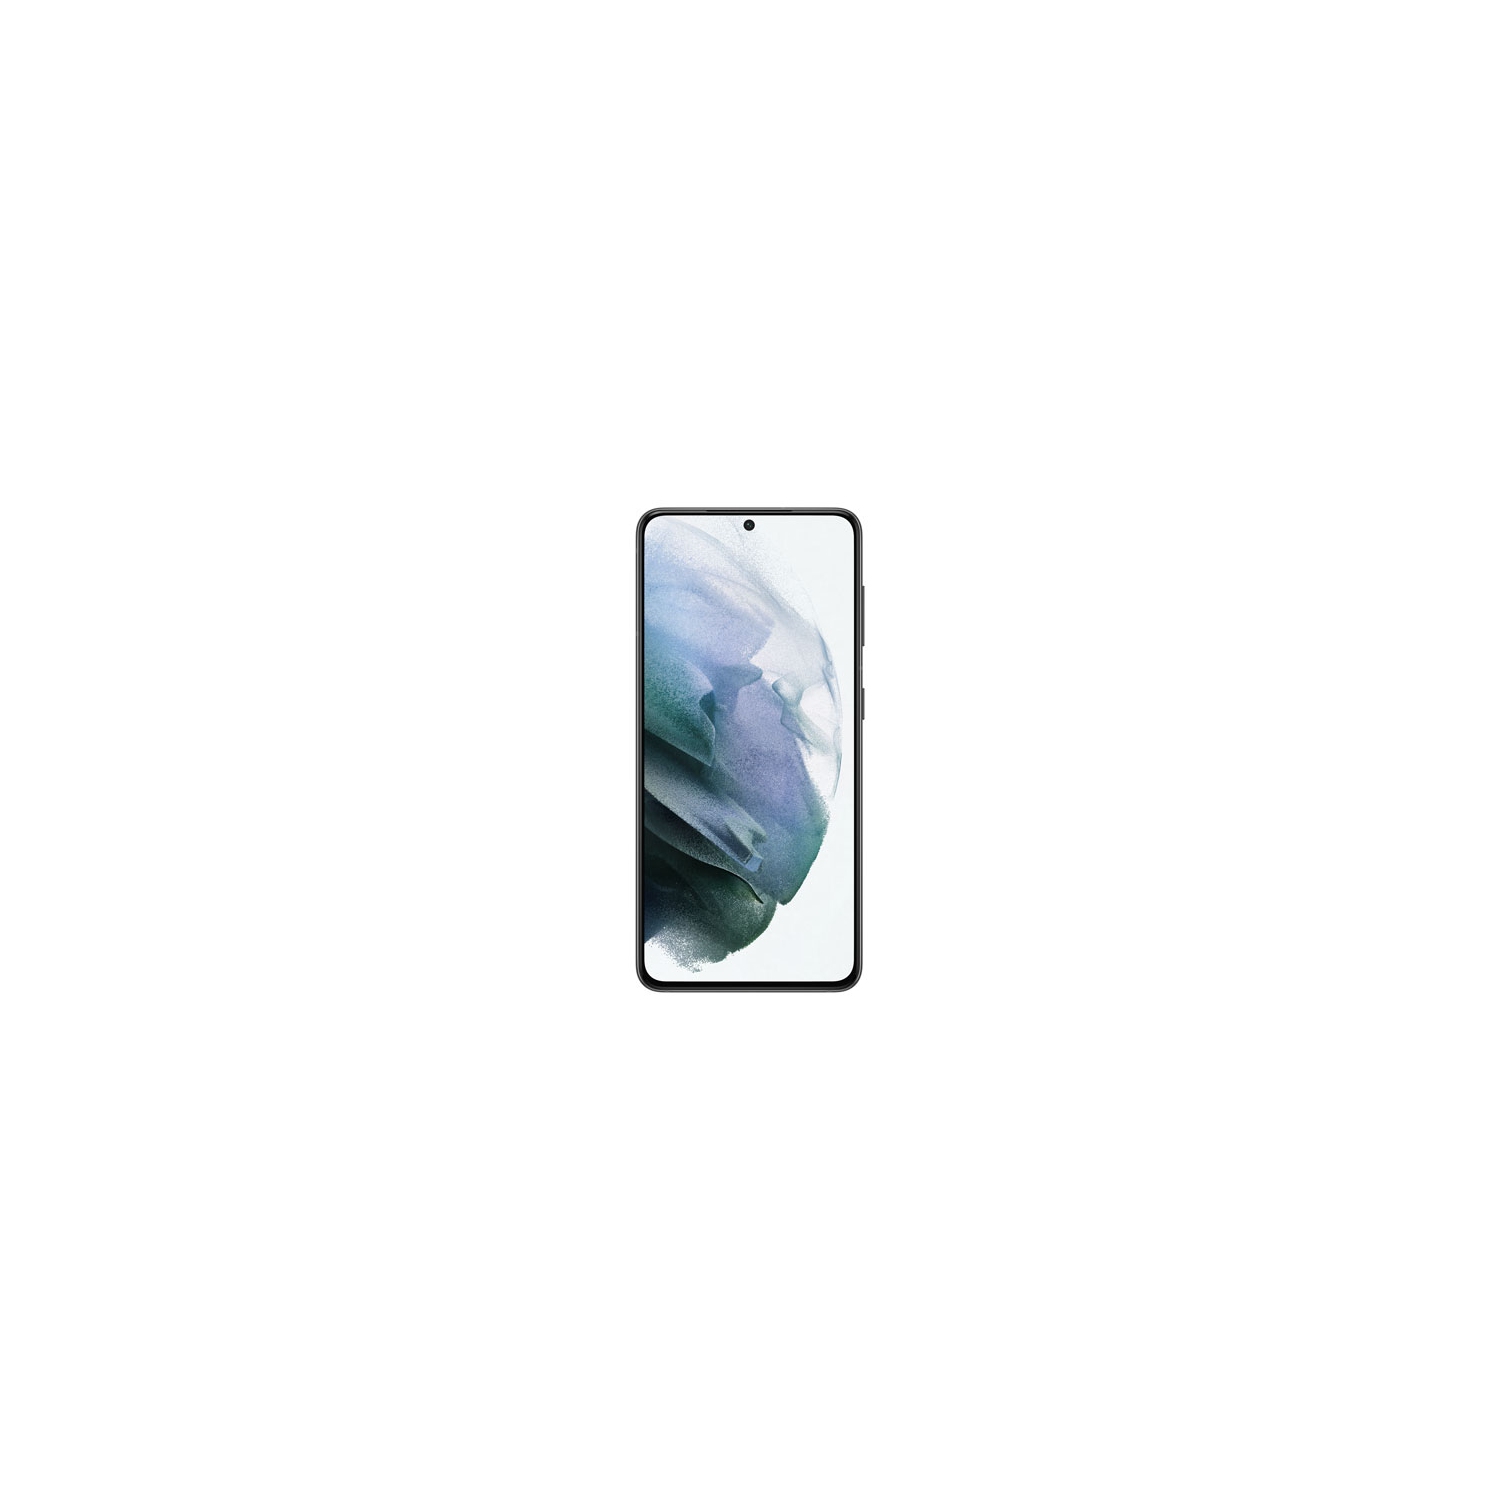 Refurbished (Good) - Samsung Galaxy S21 5G 256GB - Phantom Grey - Unlocked